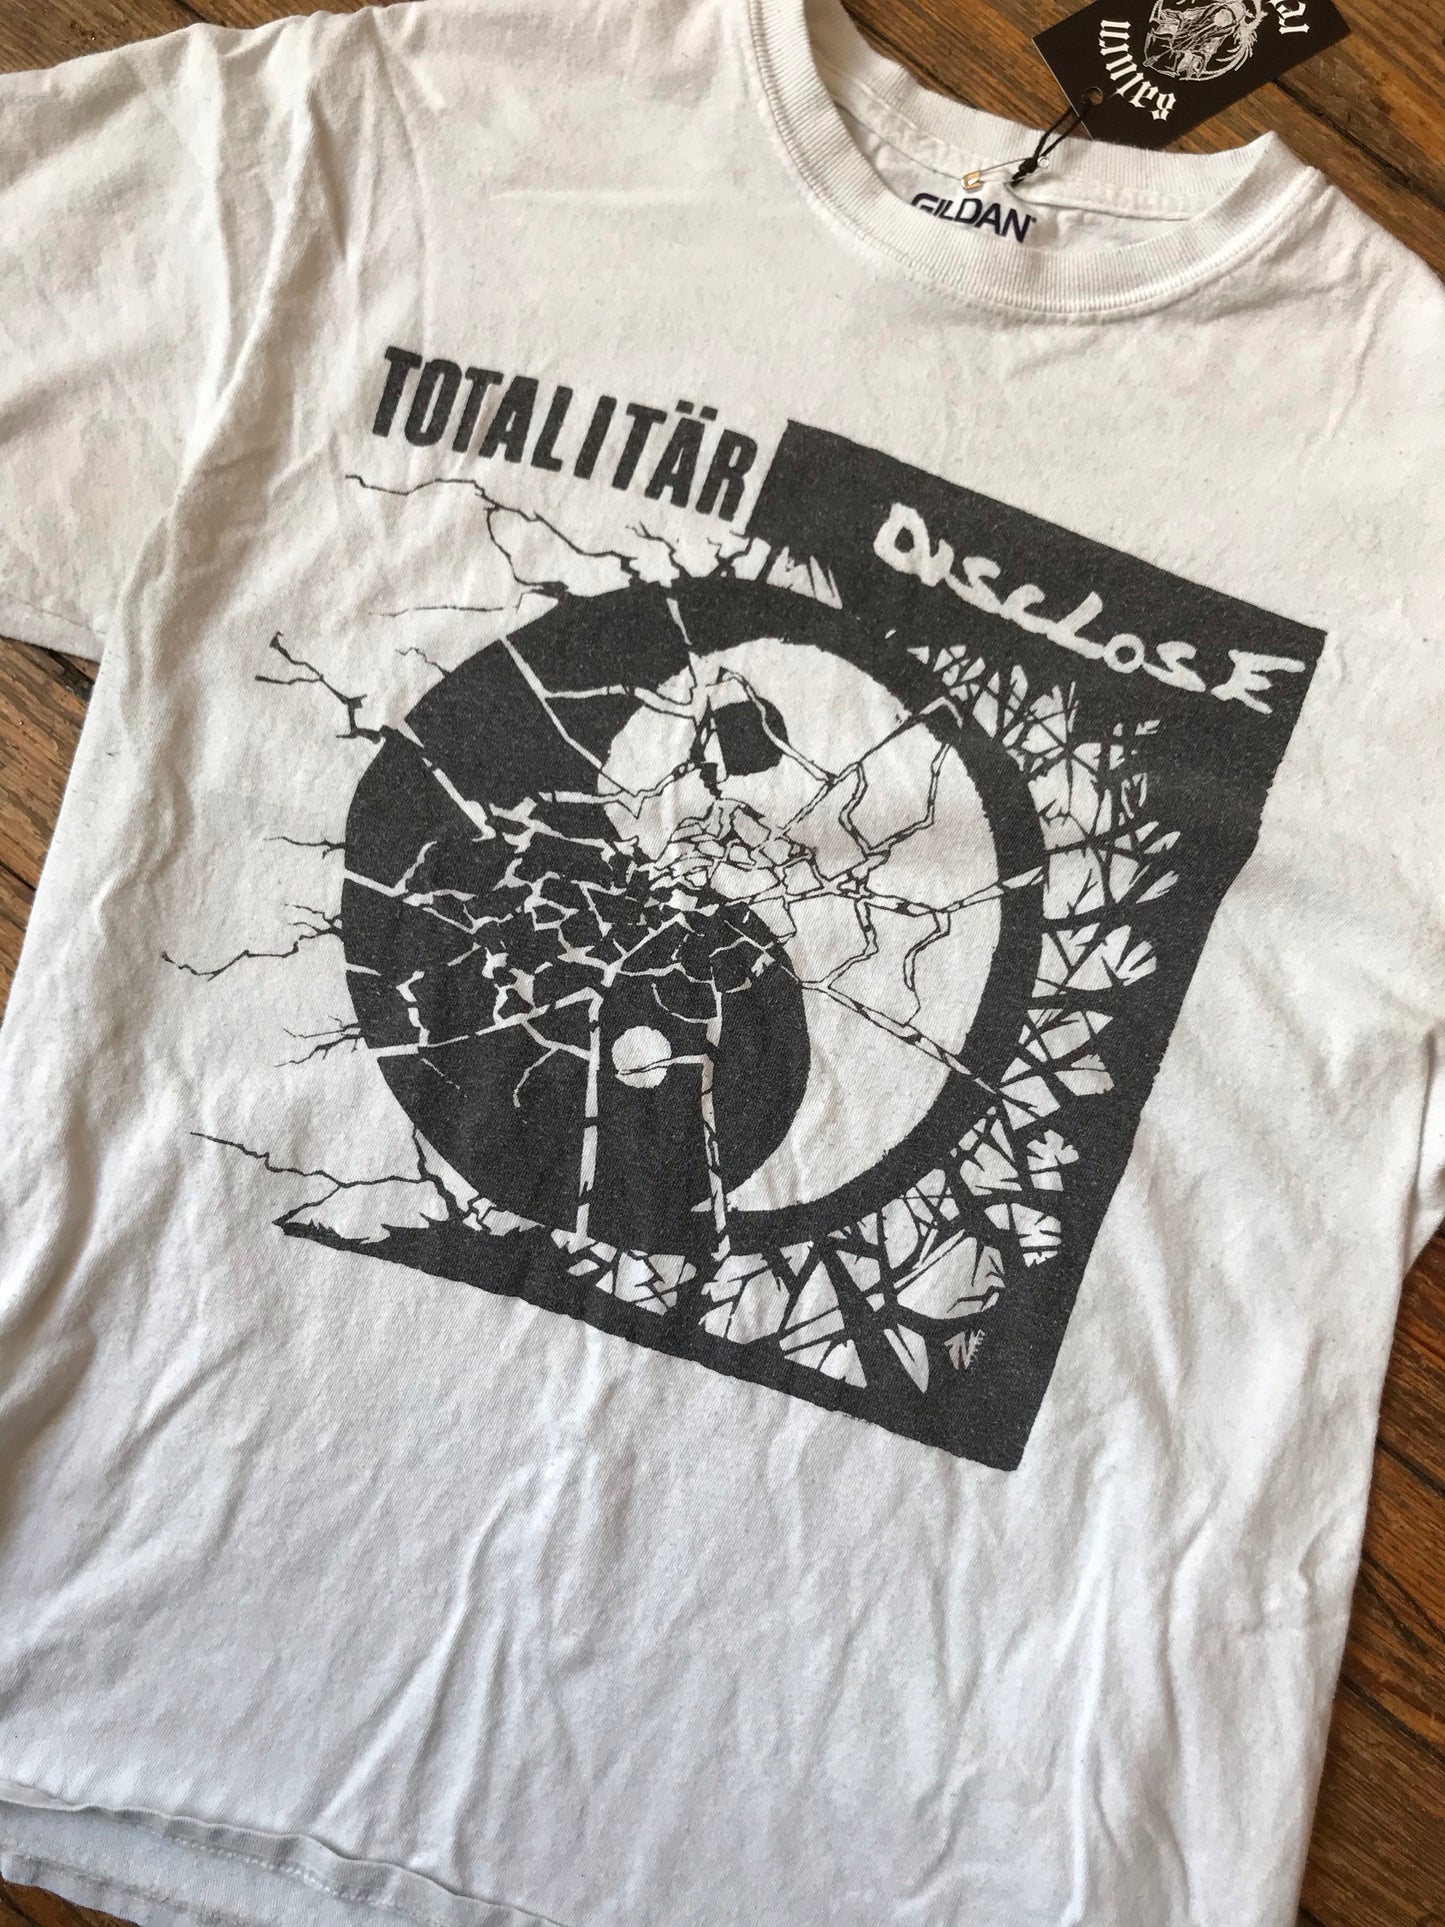 Totalitär & Disclose T-Shirt